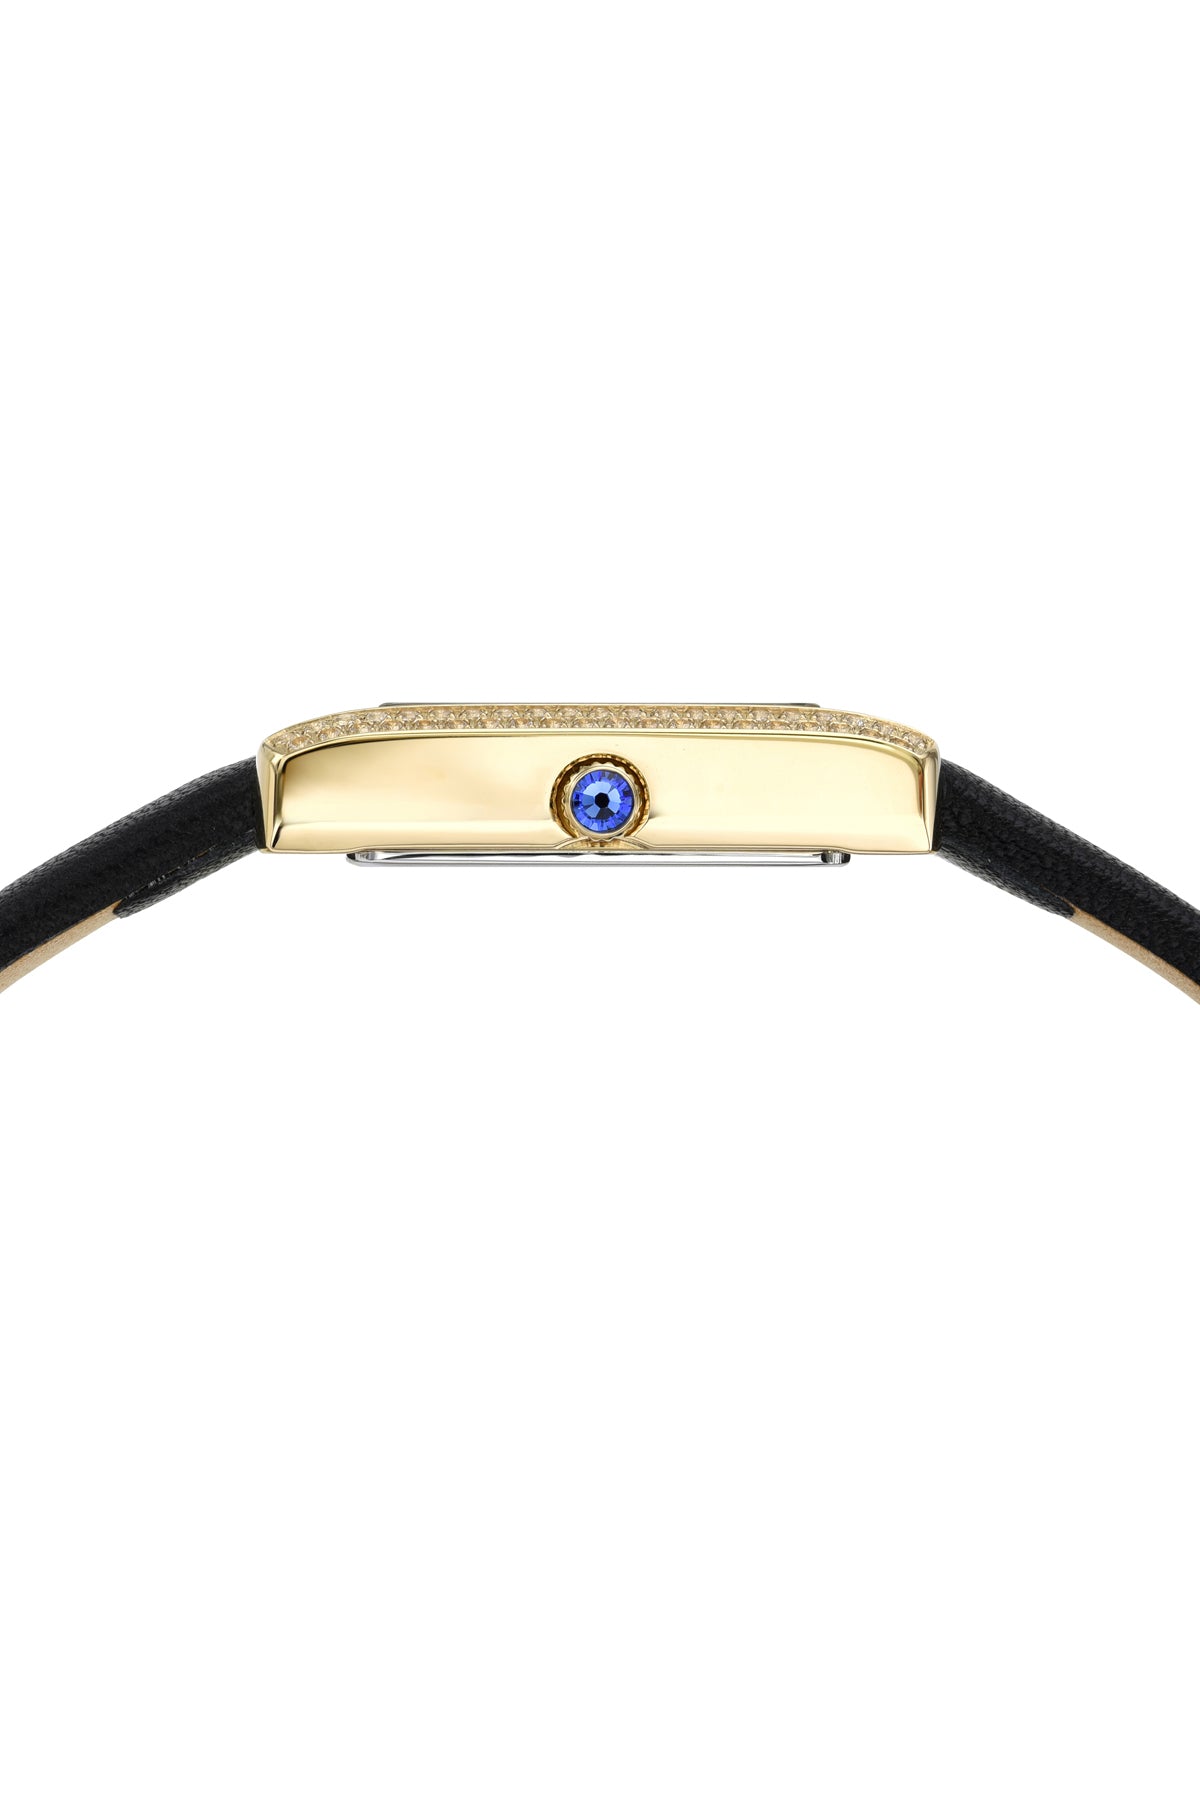 Porsamo Bleu Karolina luxury diamond topaz rectangular women's genuine leather band watch, gold, black 1084AKAL